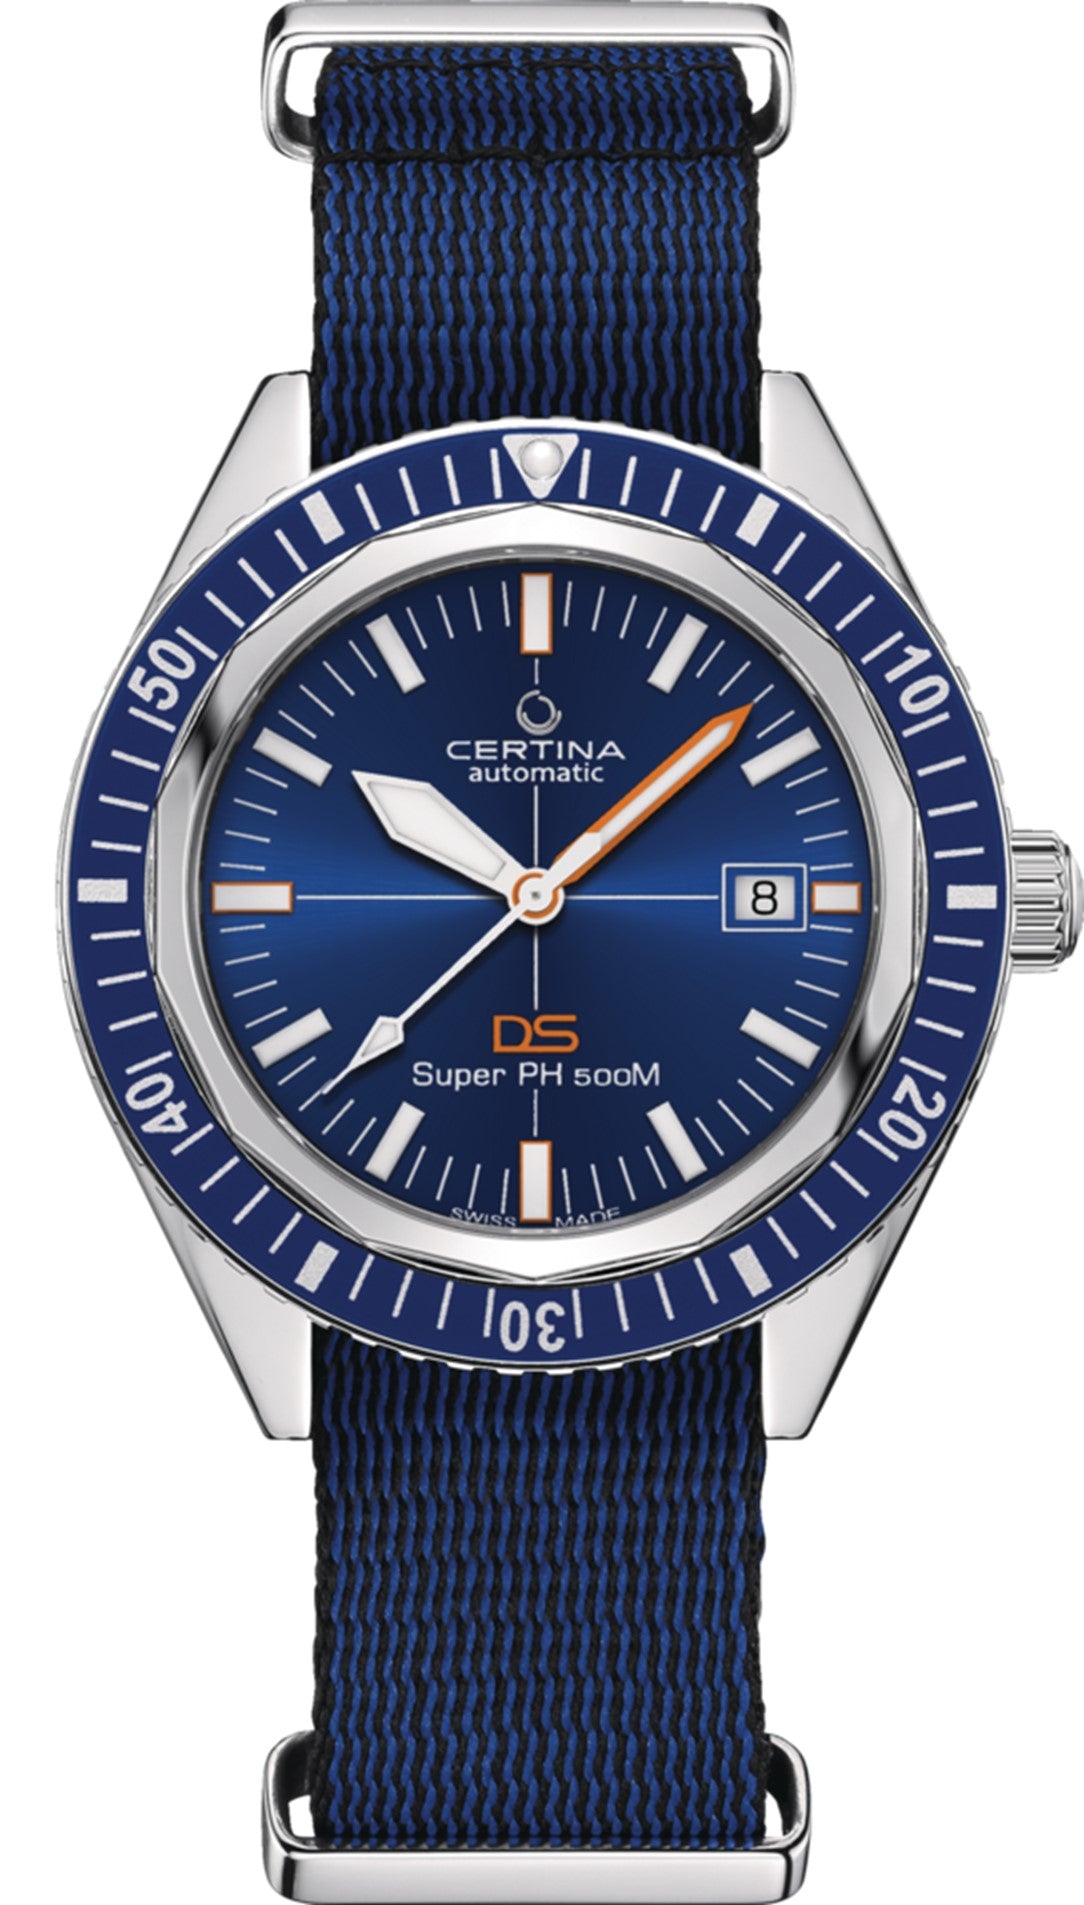 Gents Certina Ds Super Ph500m Blue Sea Turtle Automatic Watch